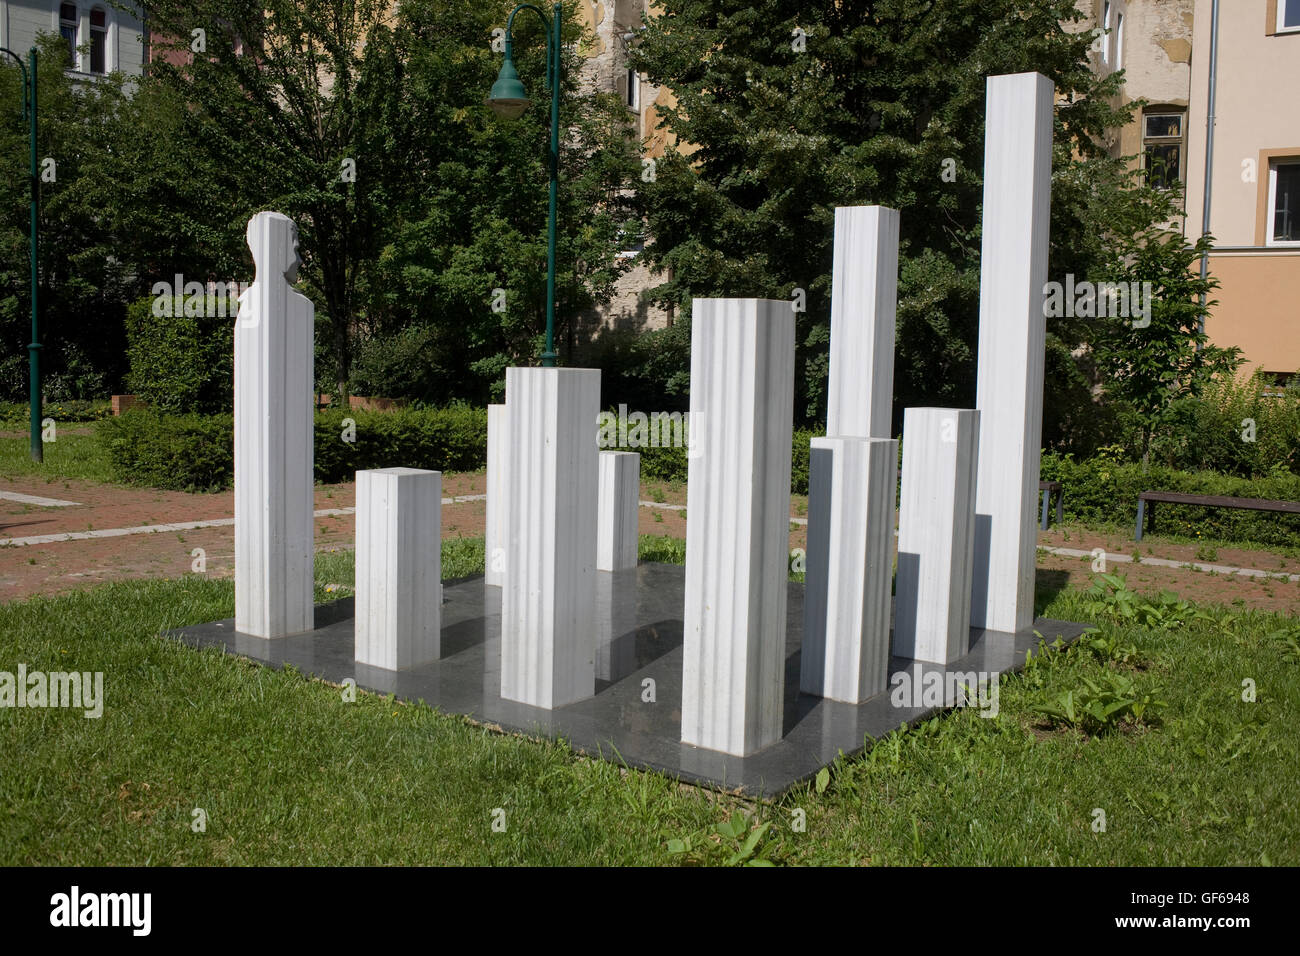 Columns of monument to 1956 revolution in Sara Salkhazi park Stock Photo